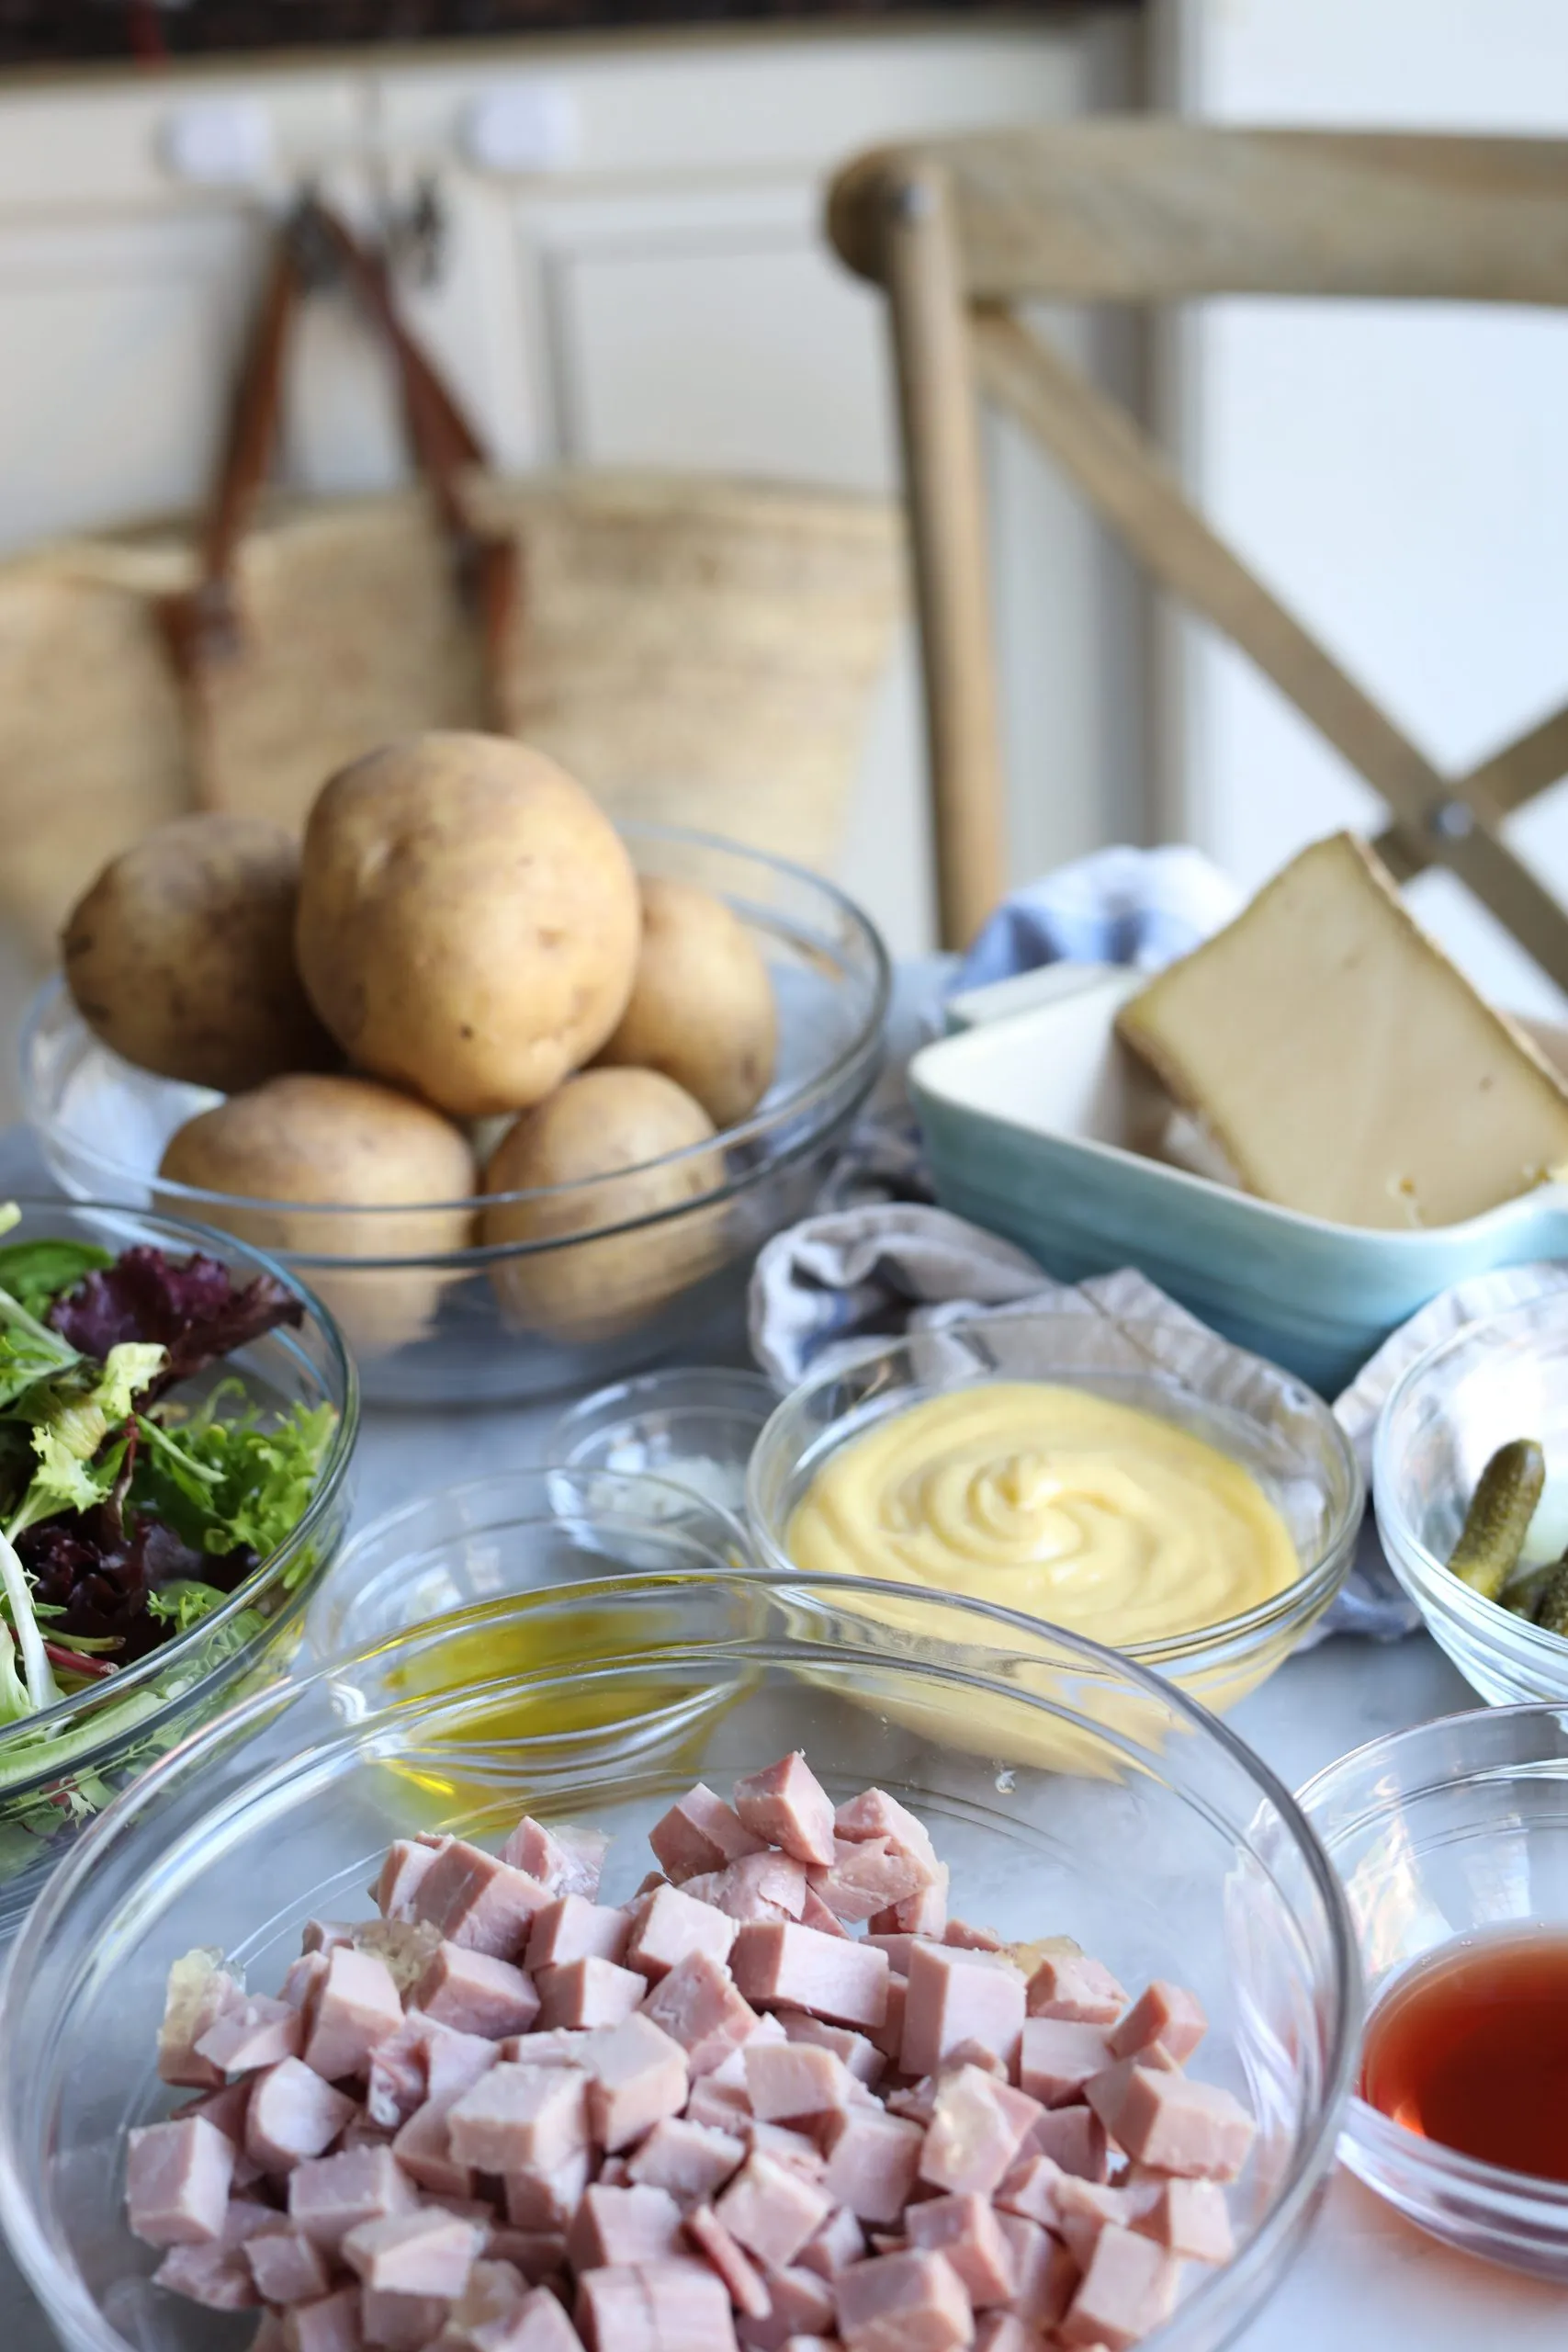 Ingredients for la salade parisienne - potatoes, ham, gherkins, olive oil, vinegar and comte cheese